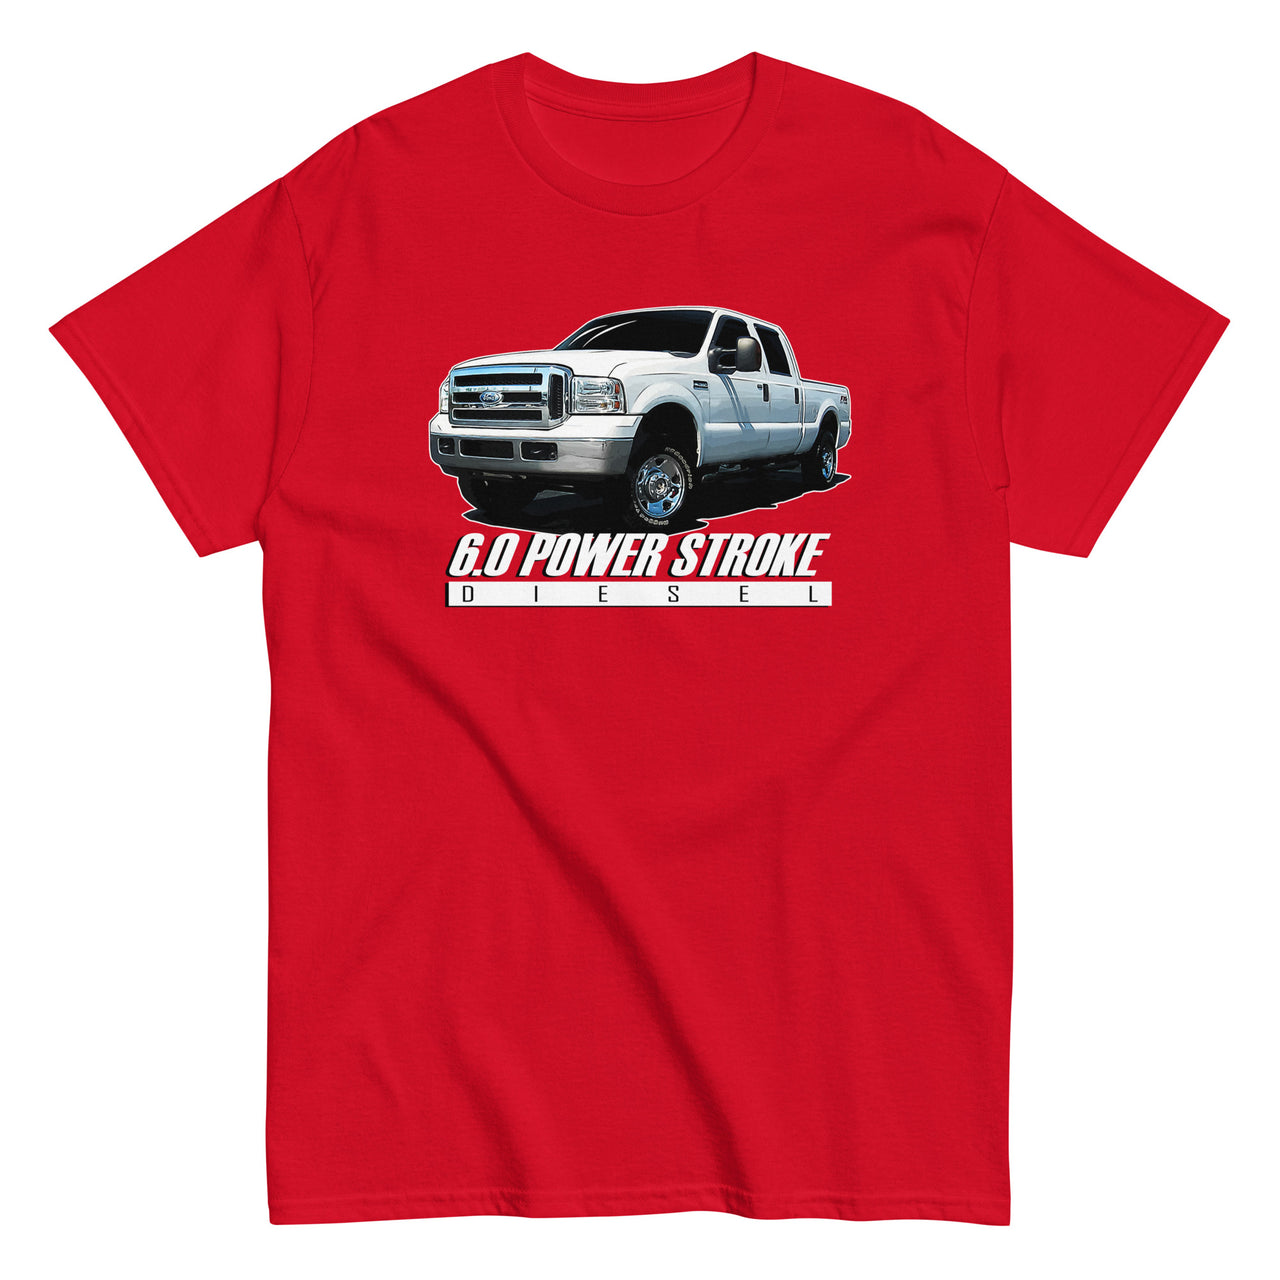 6.0 Power Stroke Diesel T-Shirt in red